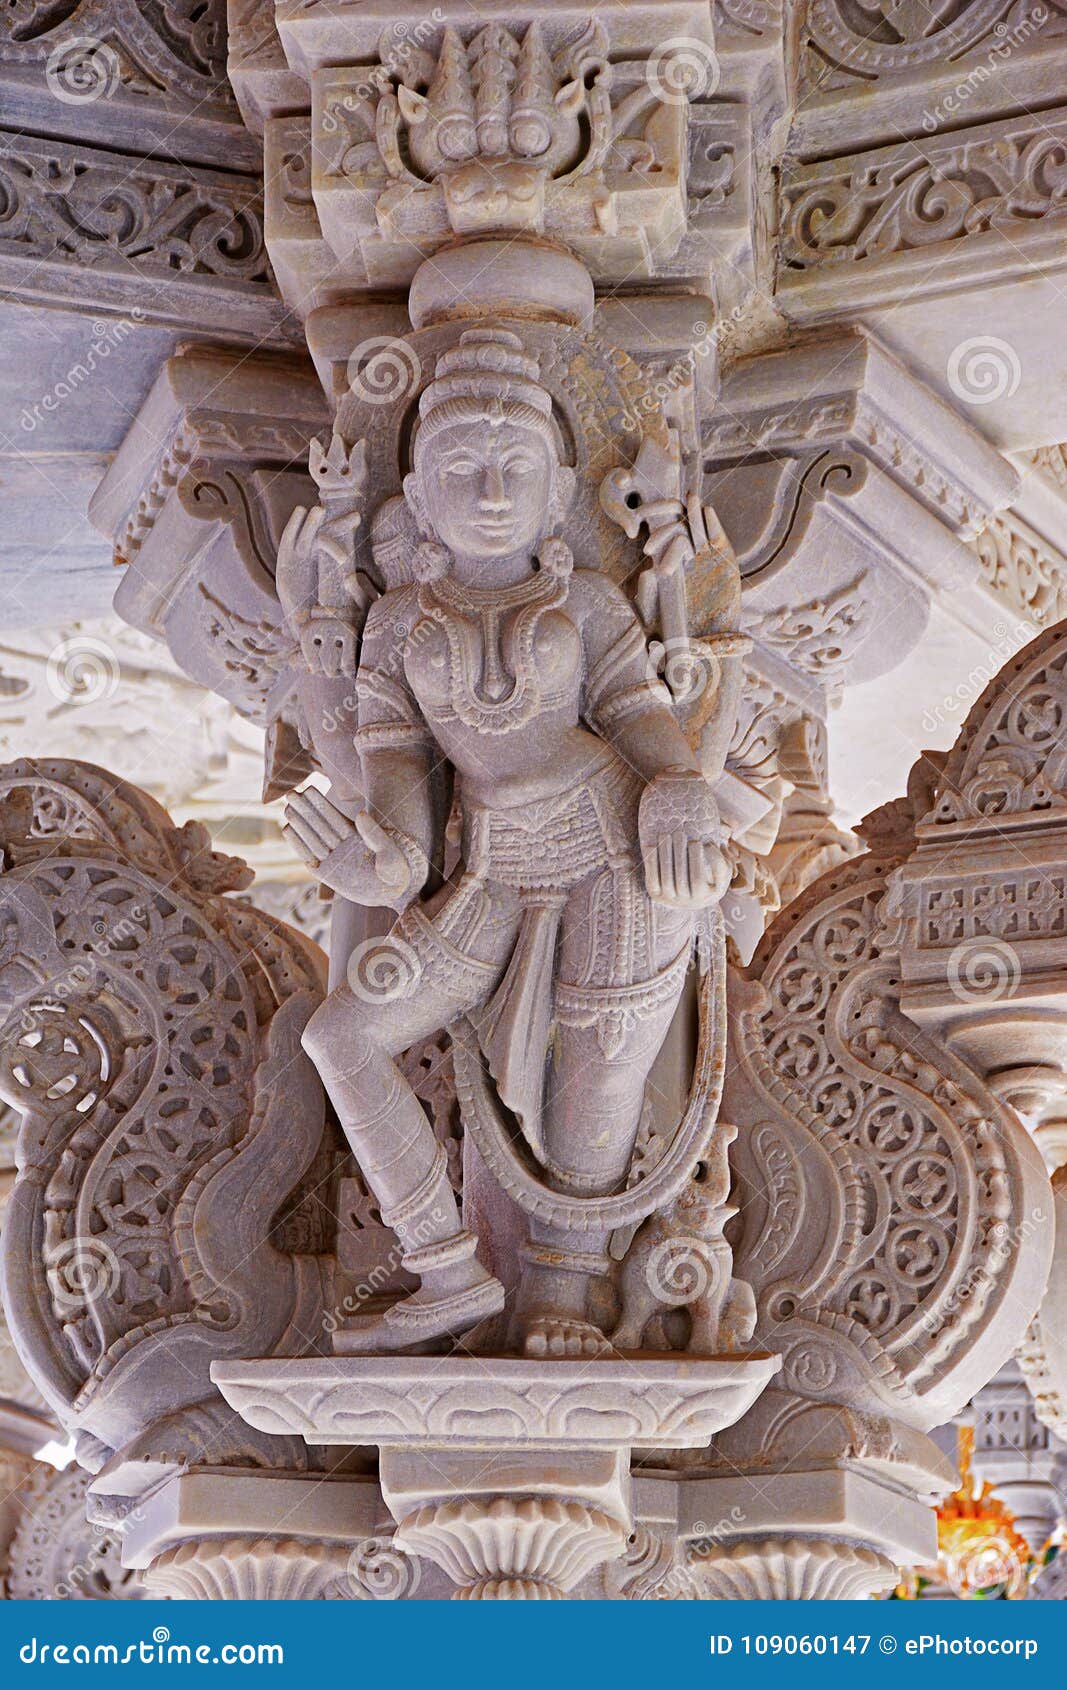 apsara statue, baps swaminarayan mandir, katraj, pune